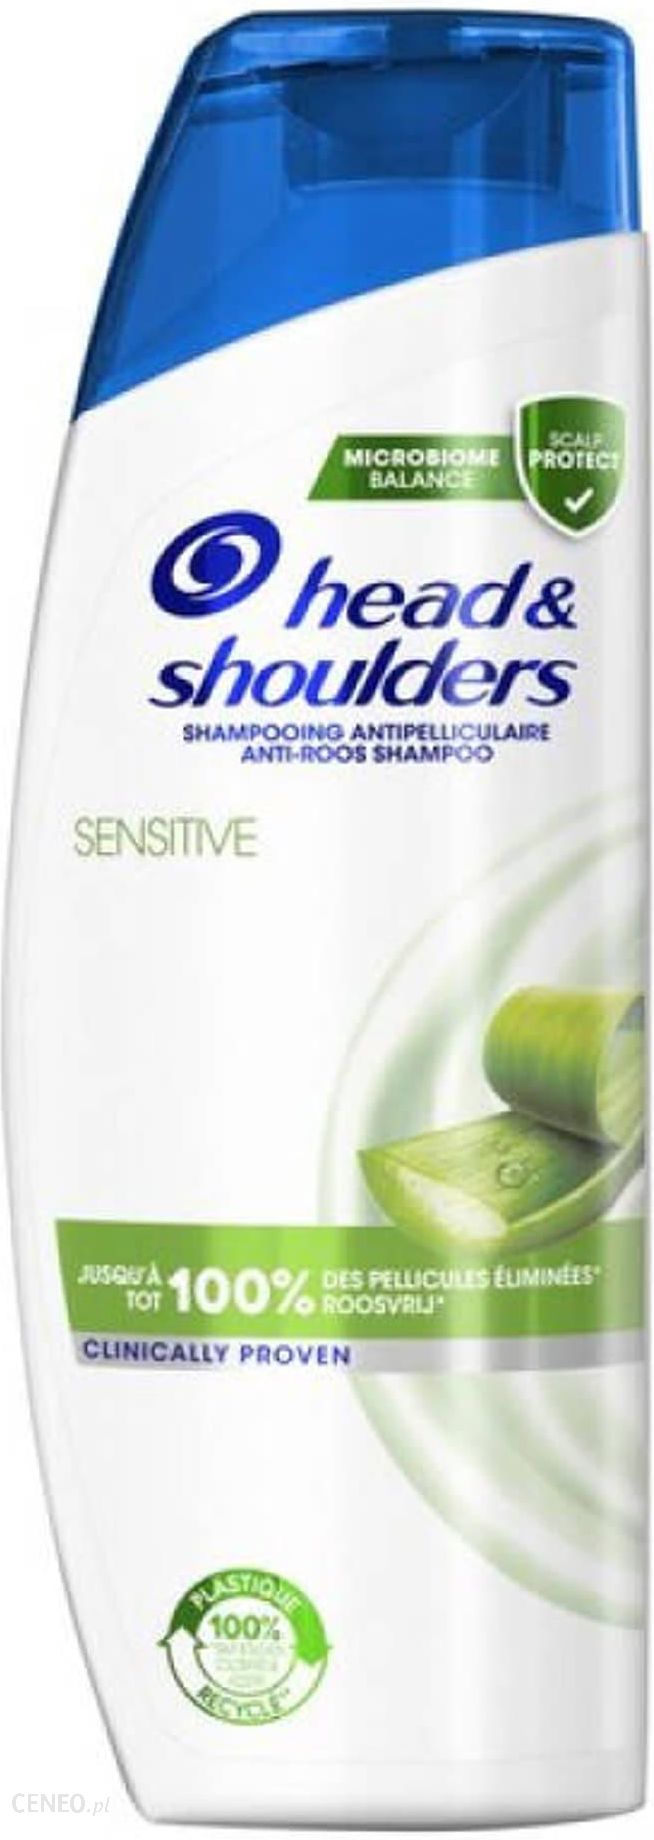 headen shouders szampon ceneo